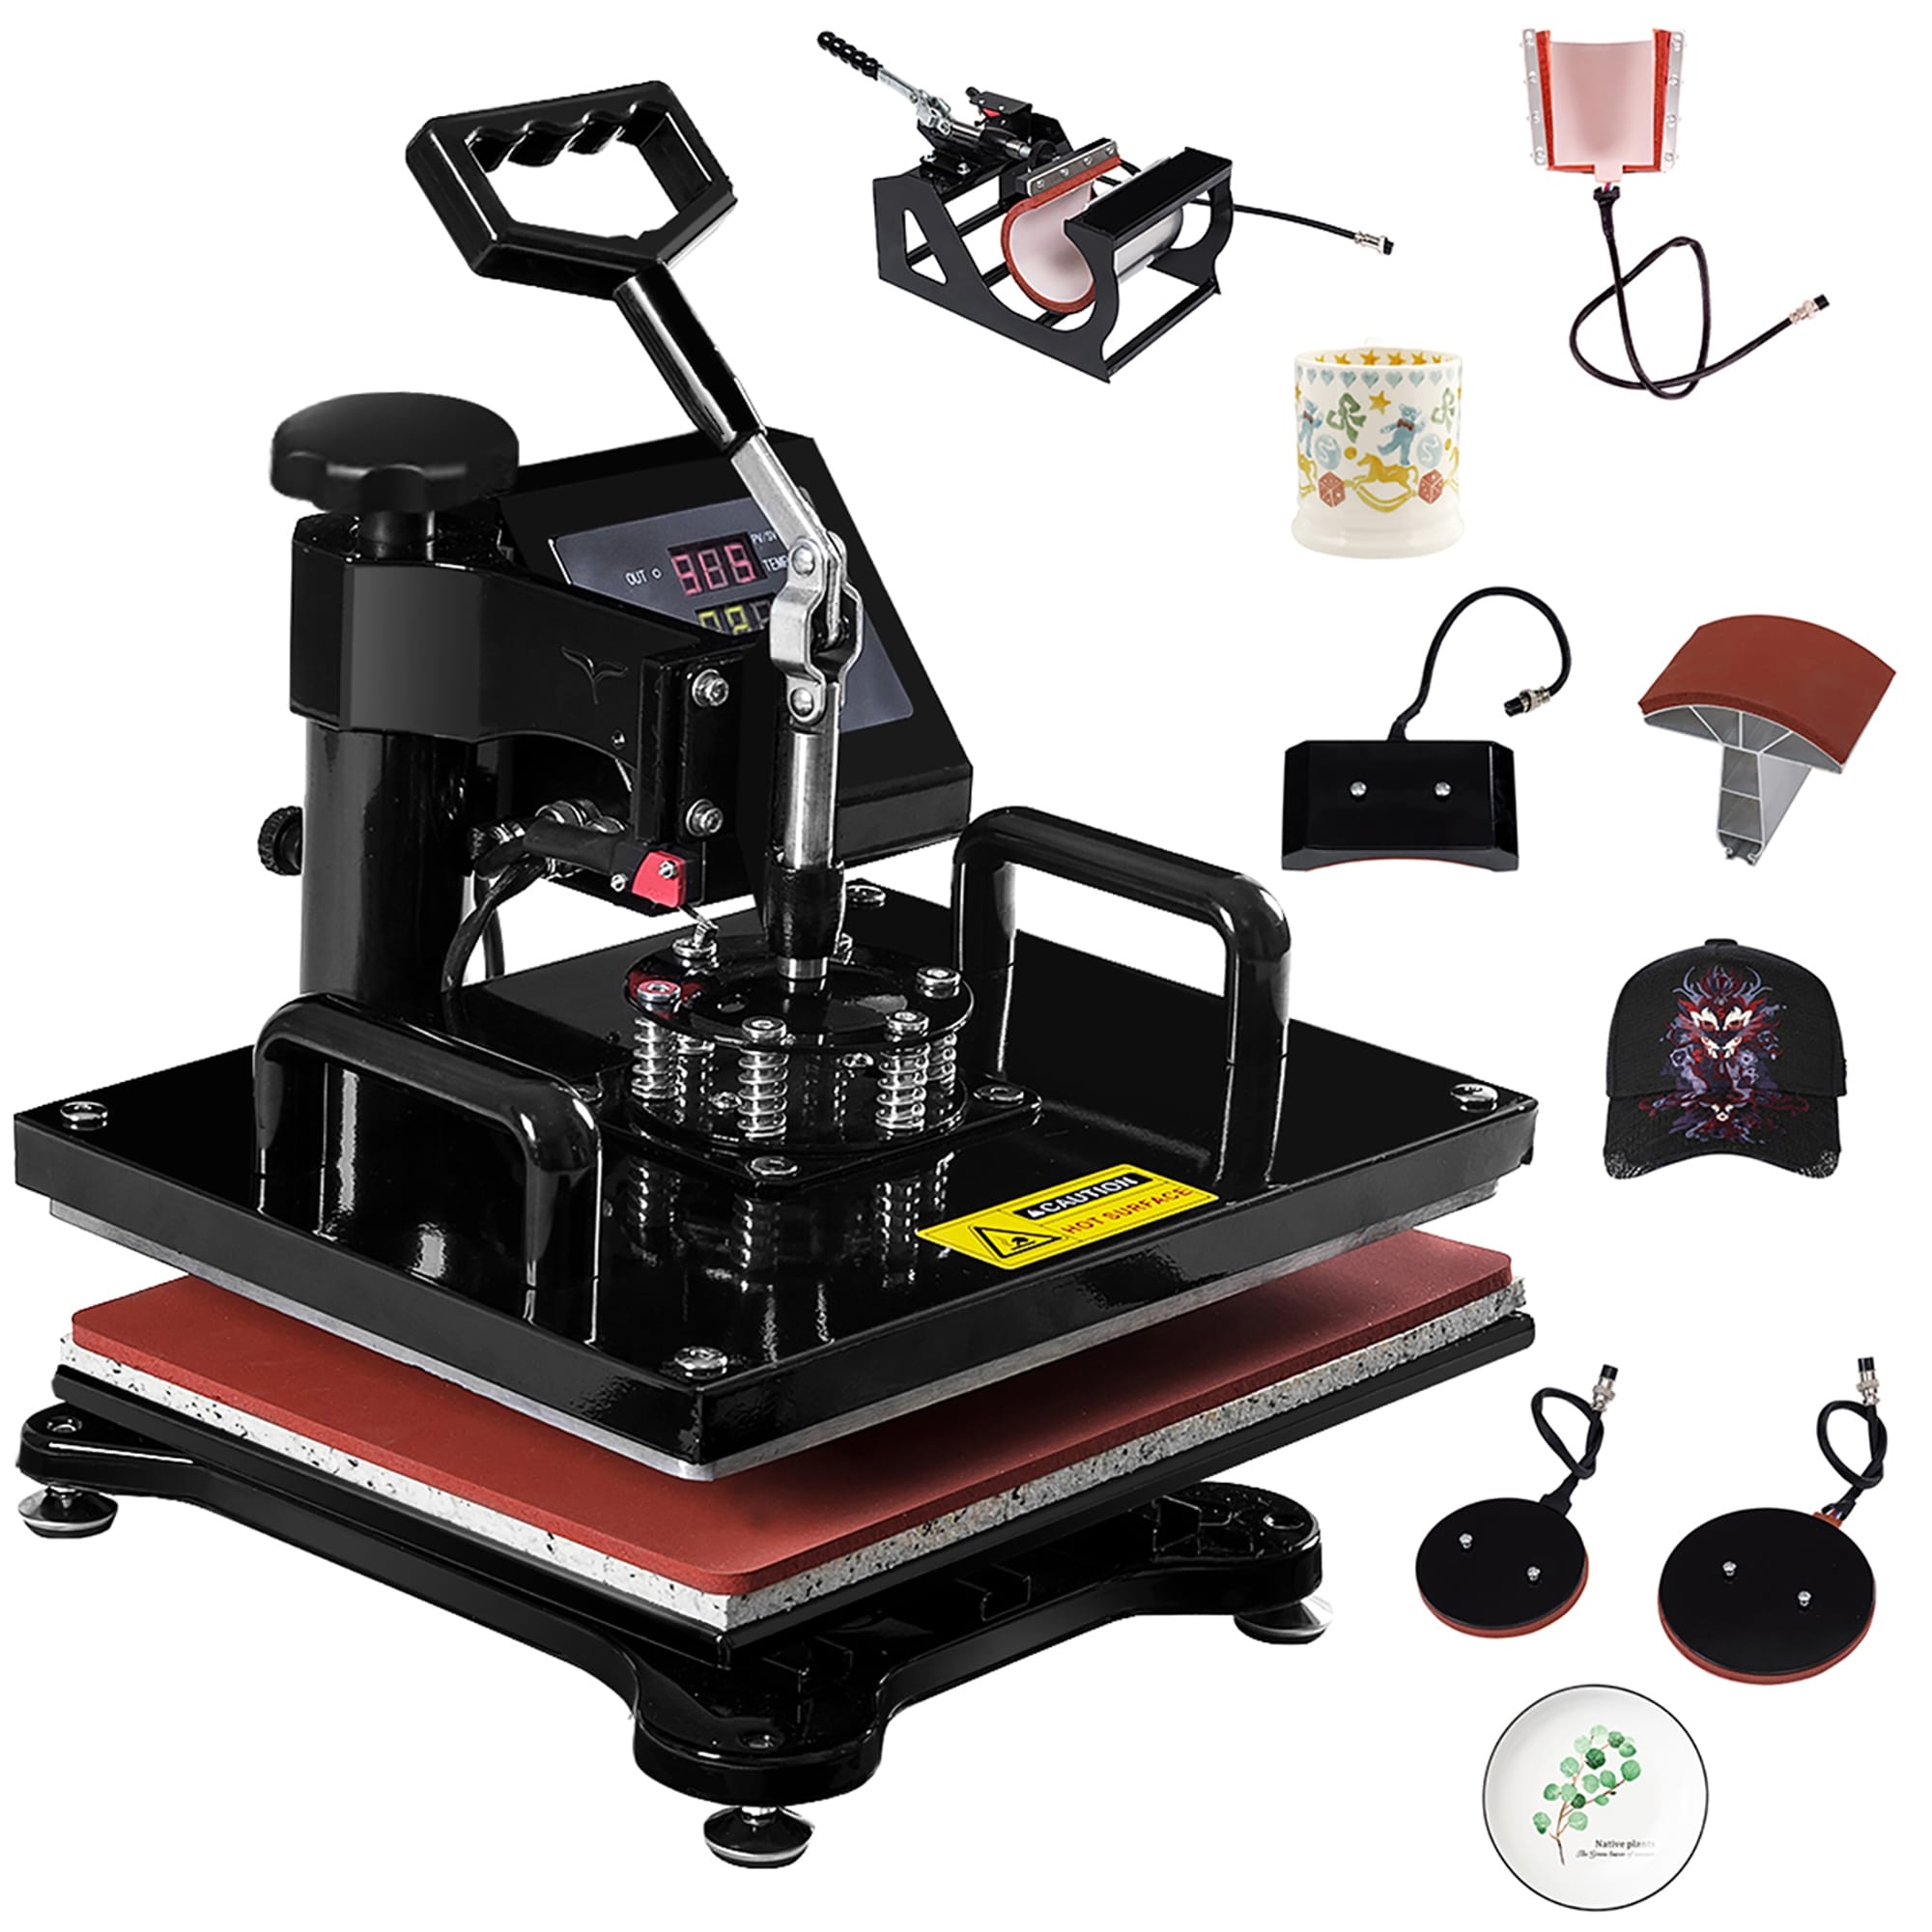 VEVOR Heat Press Machine,10x12inches Portable Shirt Printing